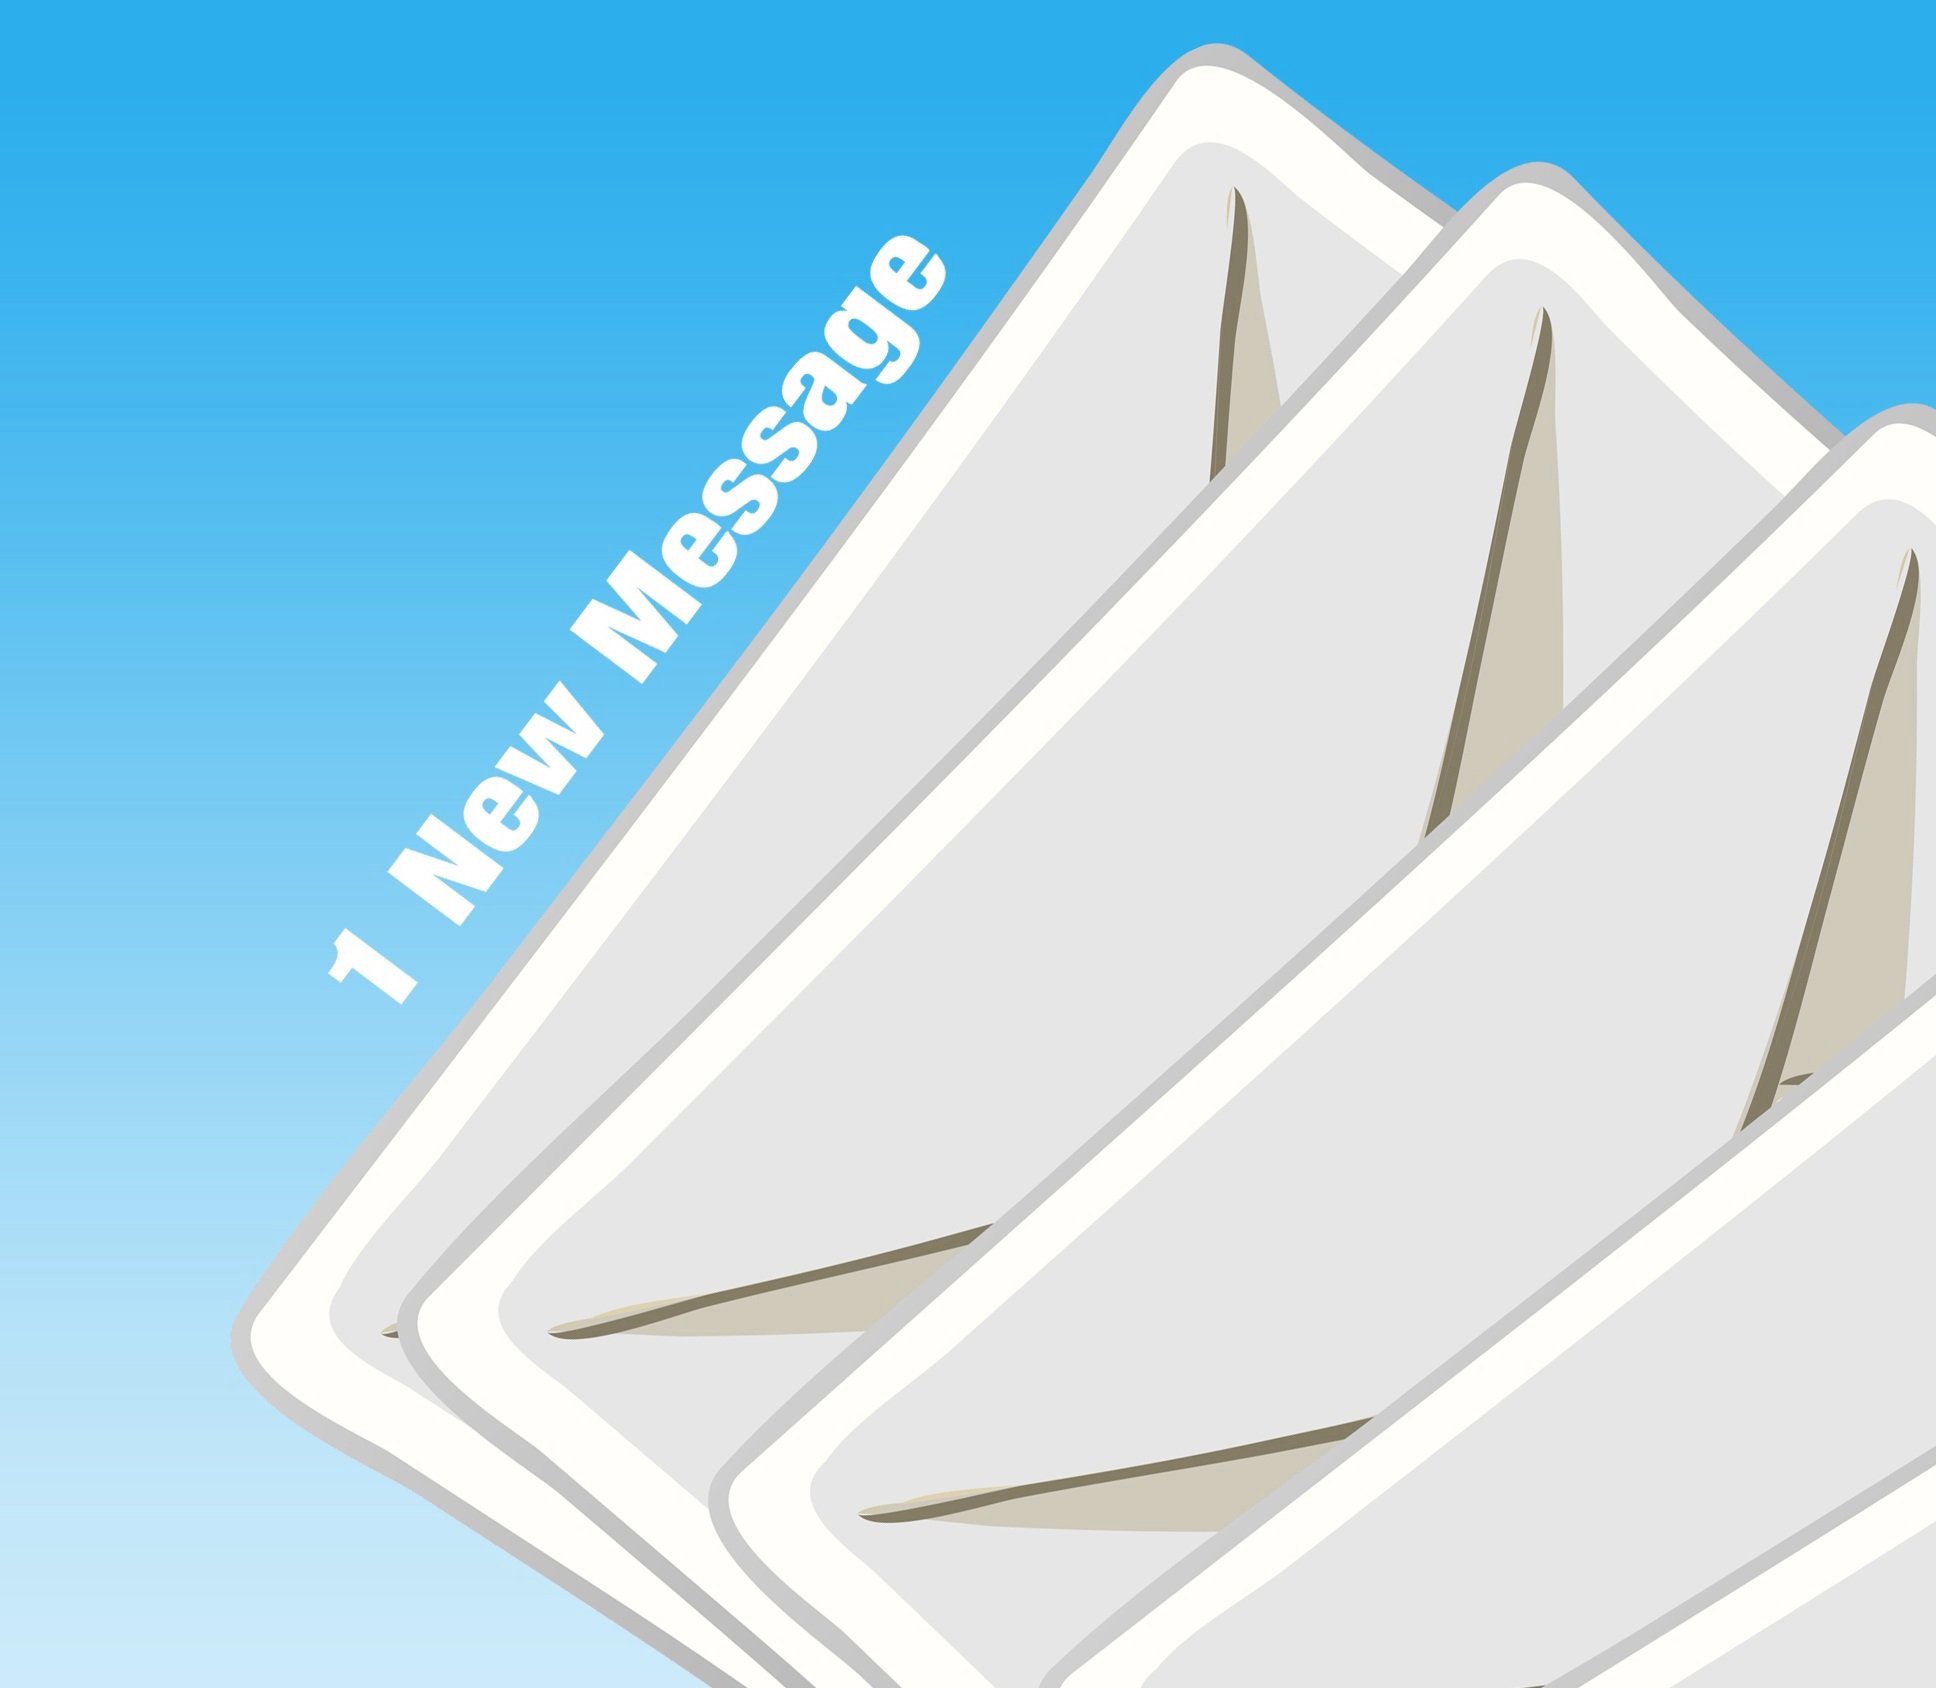 Slimmer archiveren: Outlook automatisch organiseren